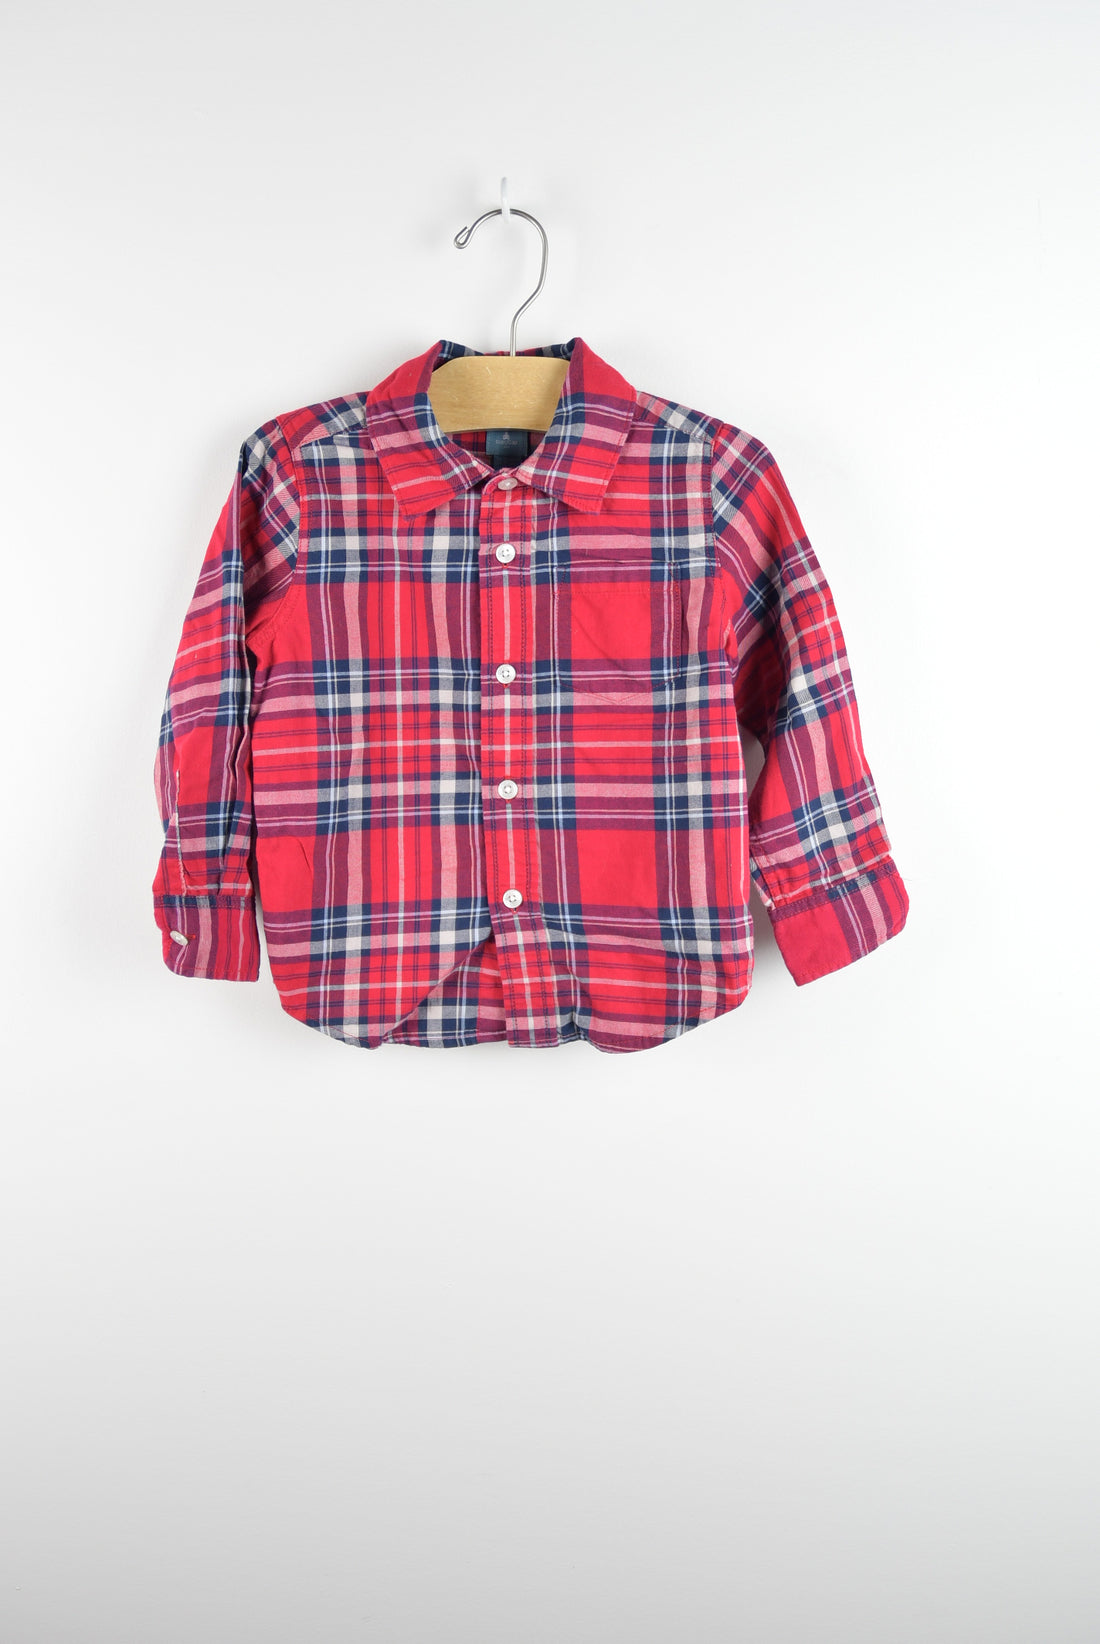 Gap Plaid Flannel Shirt (3T)